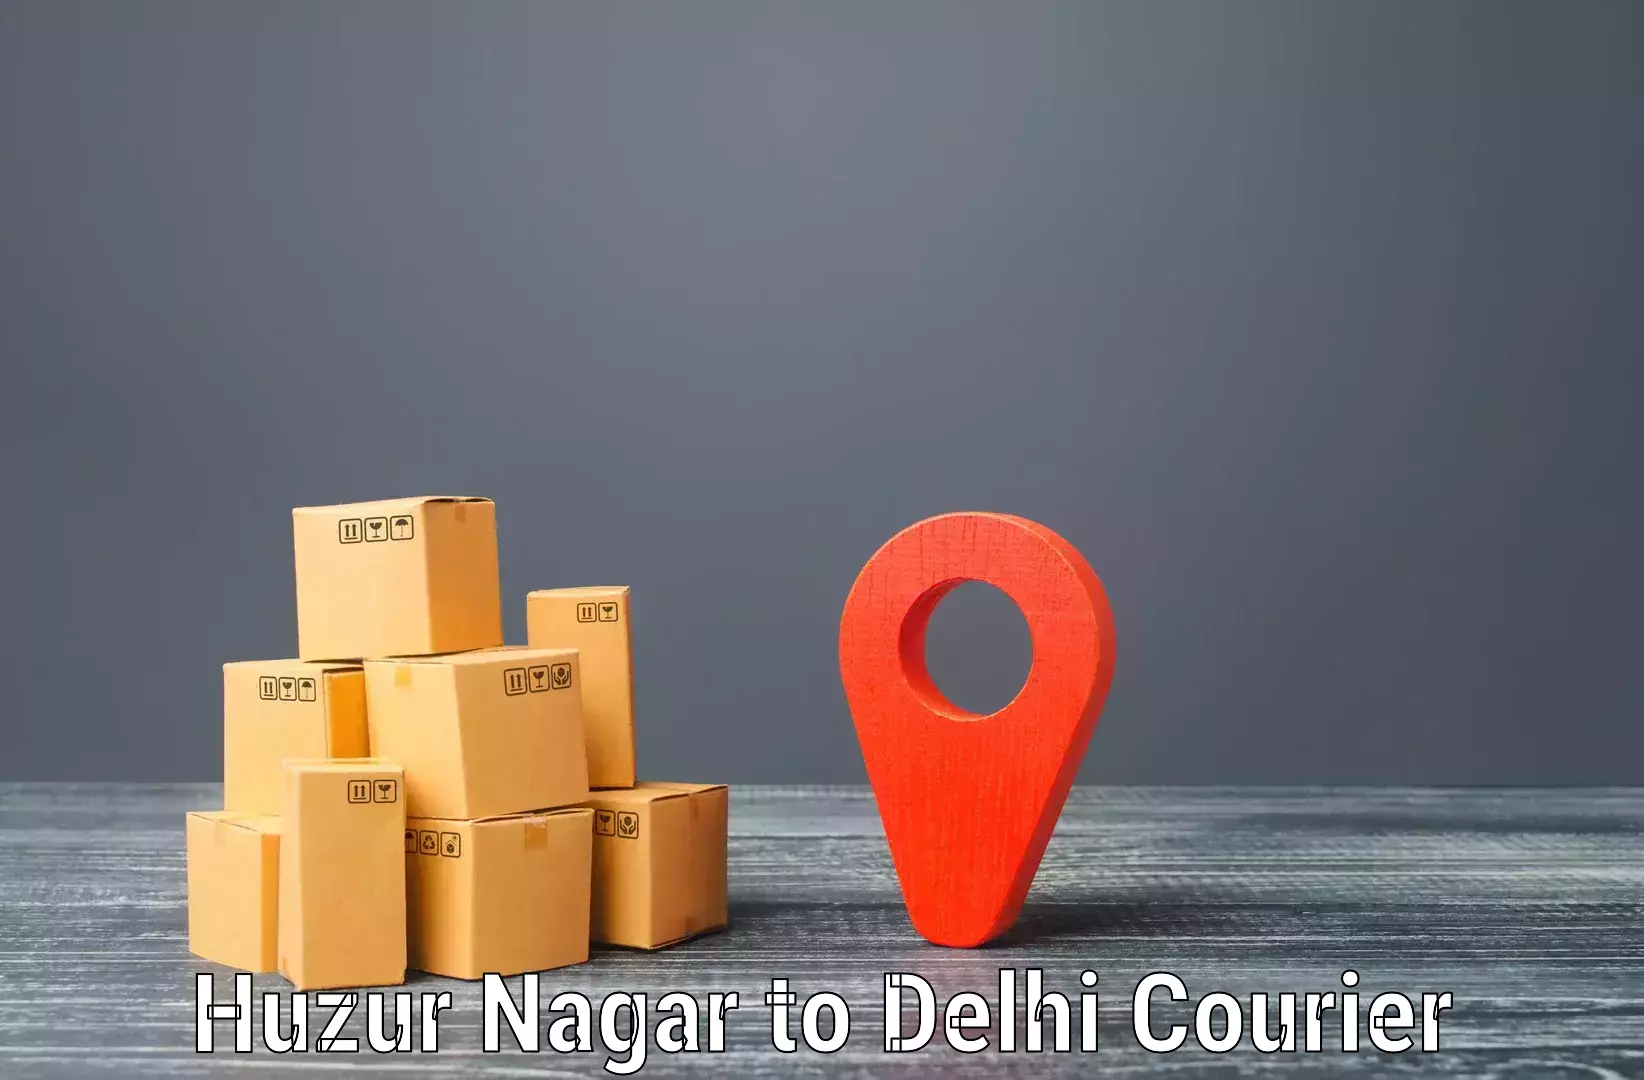 Enhanced tracking features Huzur Nagar to Subhash Nagar